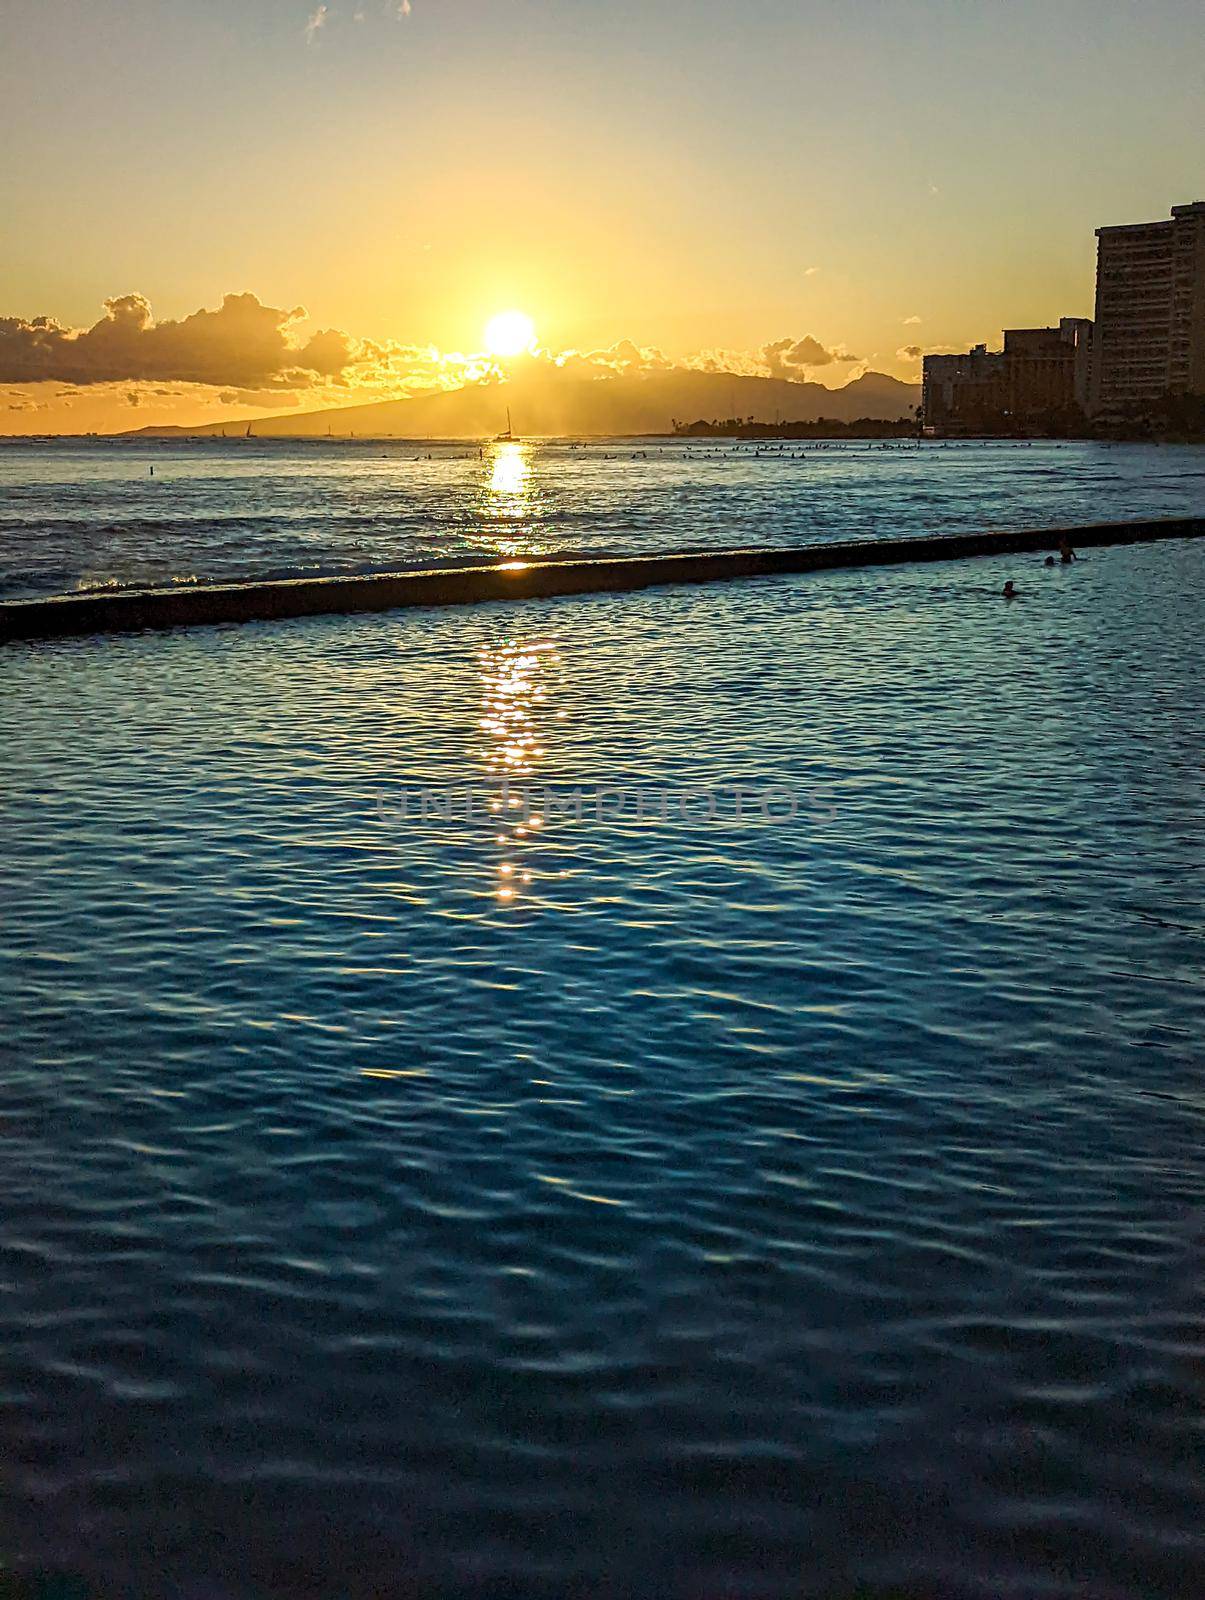 Ocean Water, Waikiki Beach, and Hotel Towers